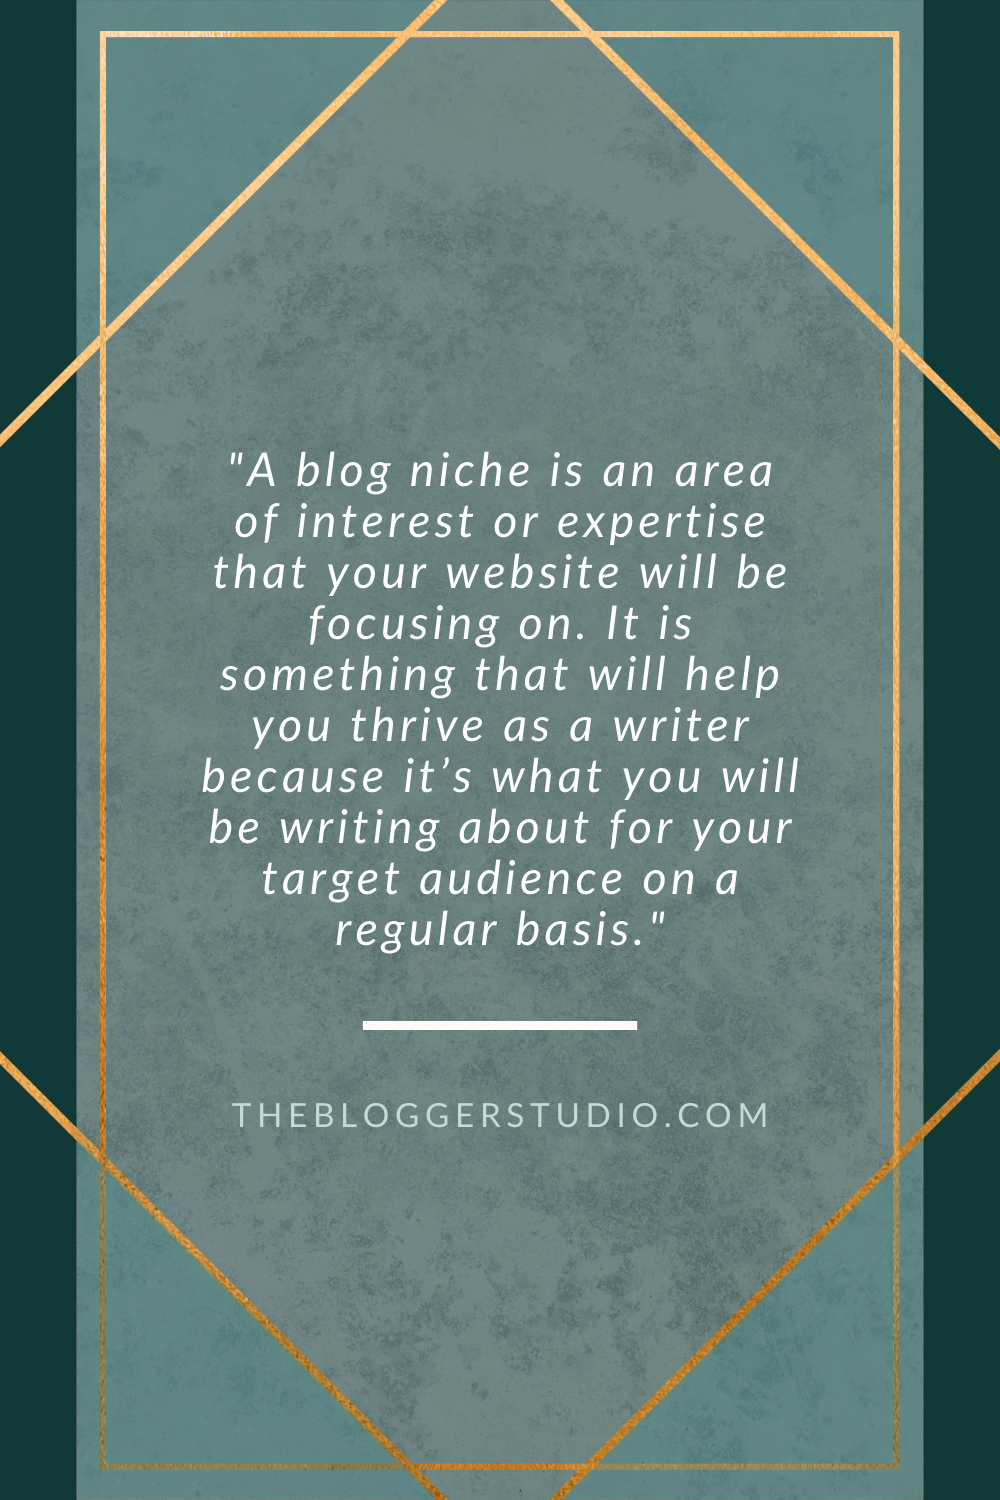 what is a blog niche